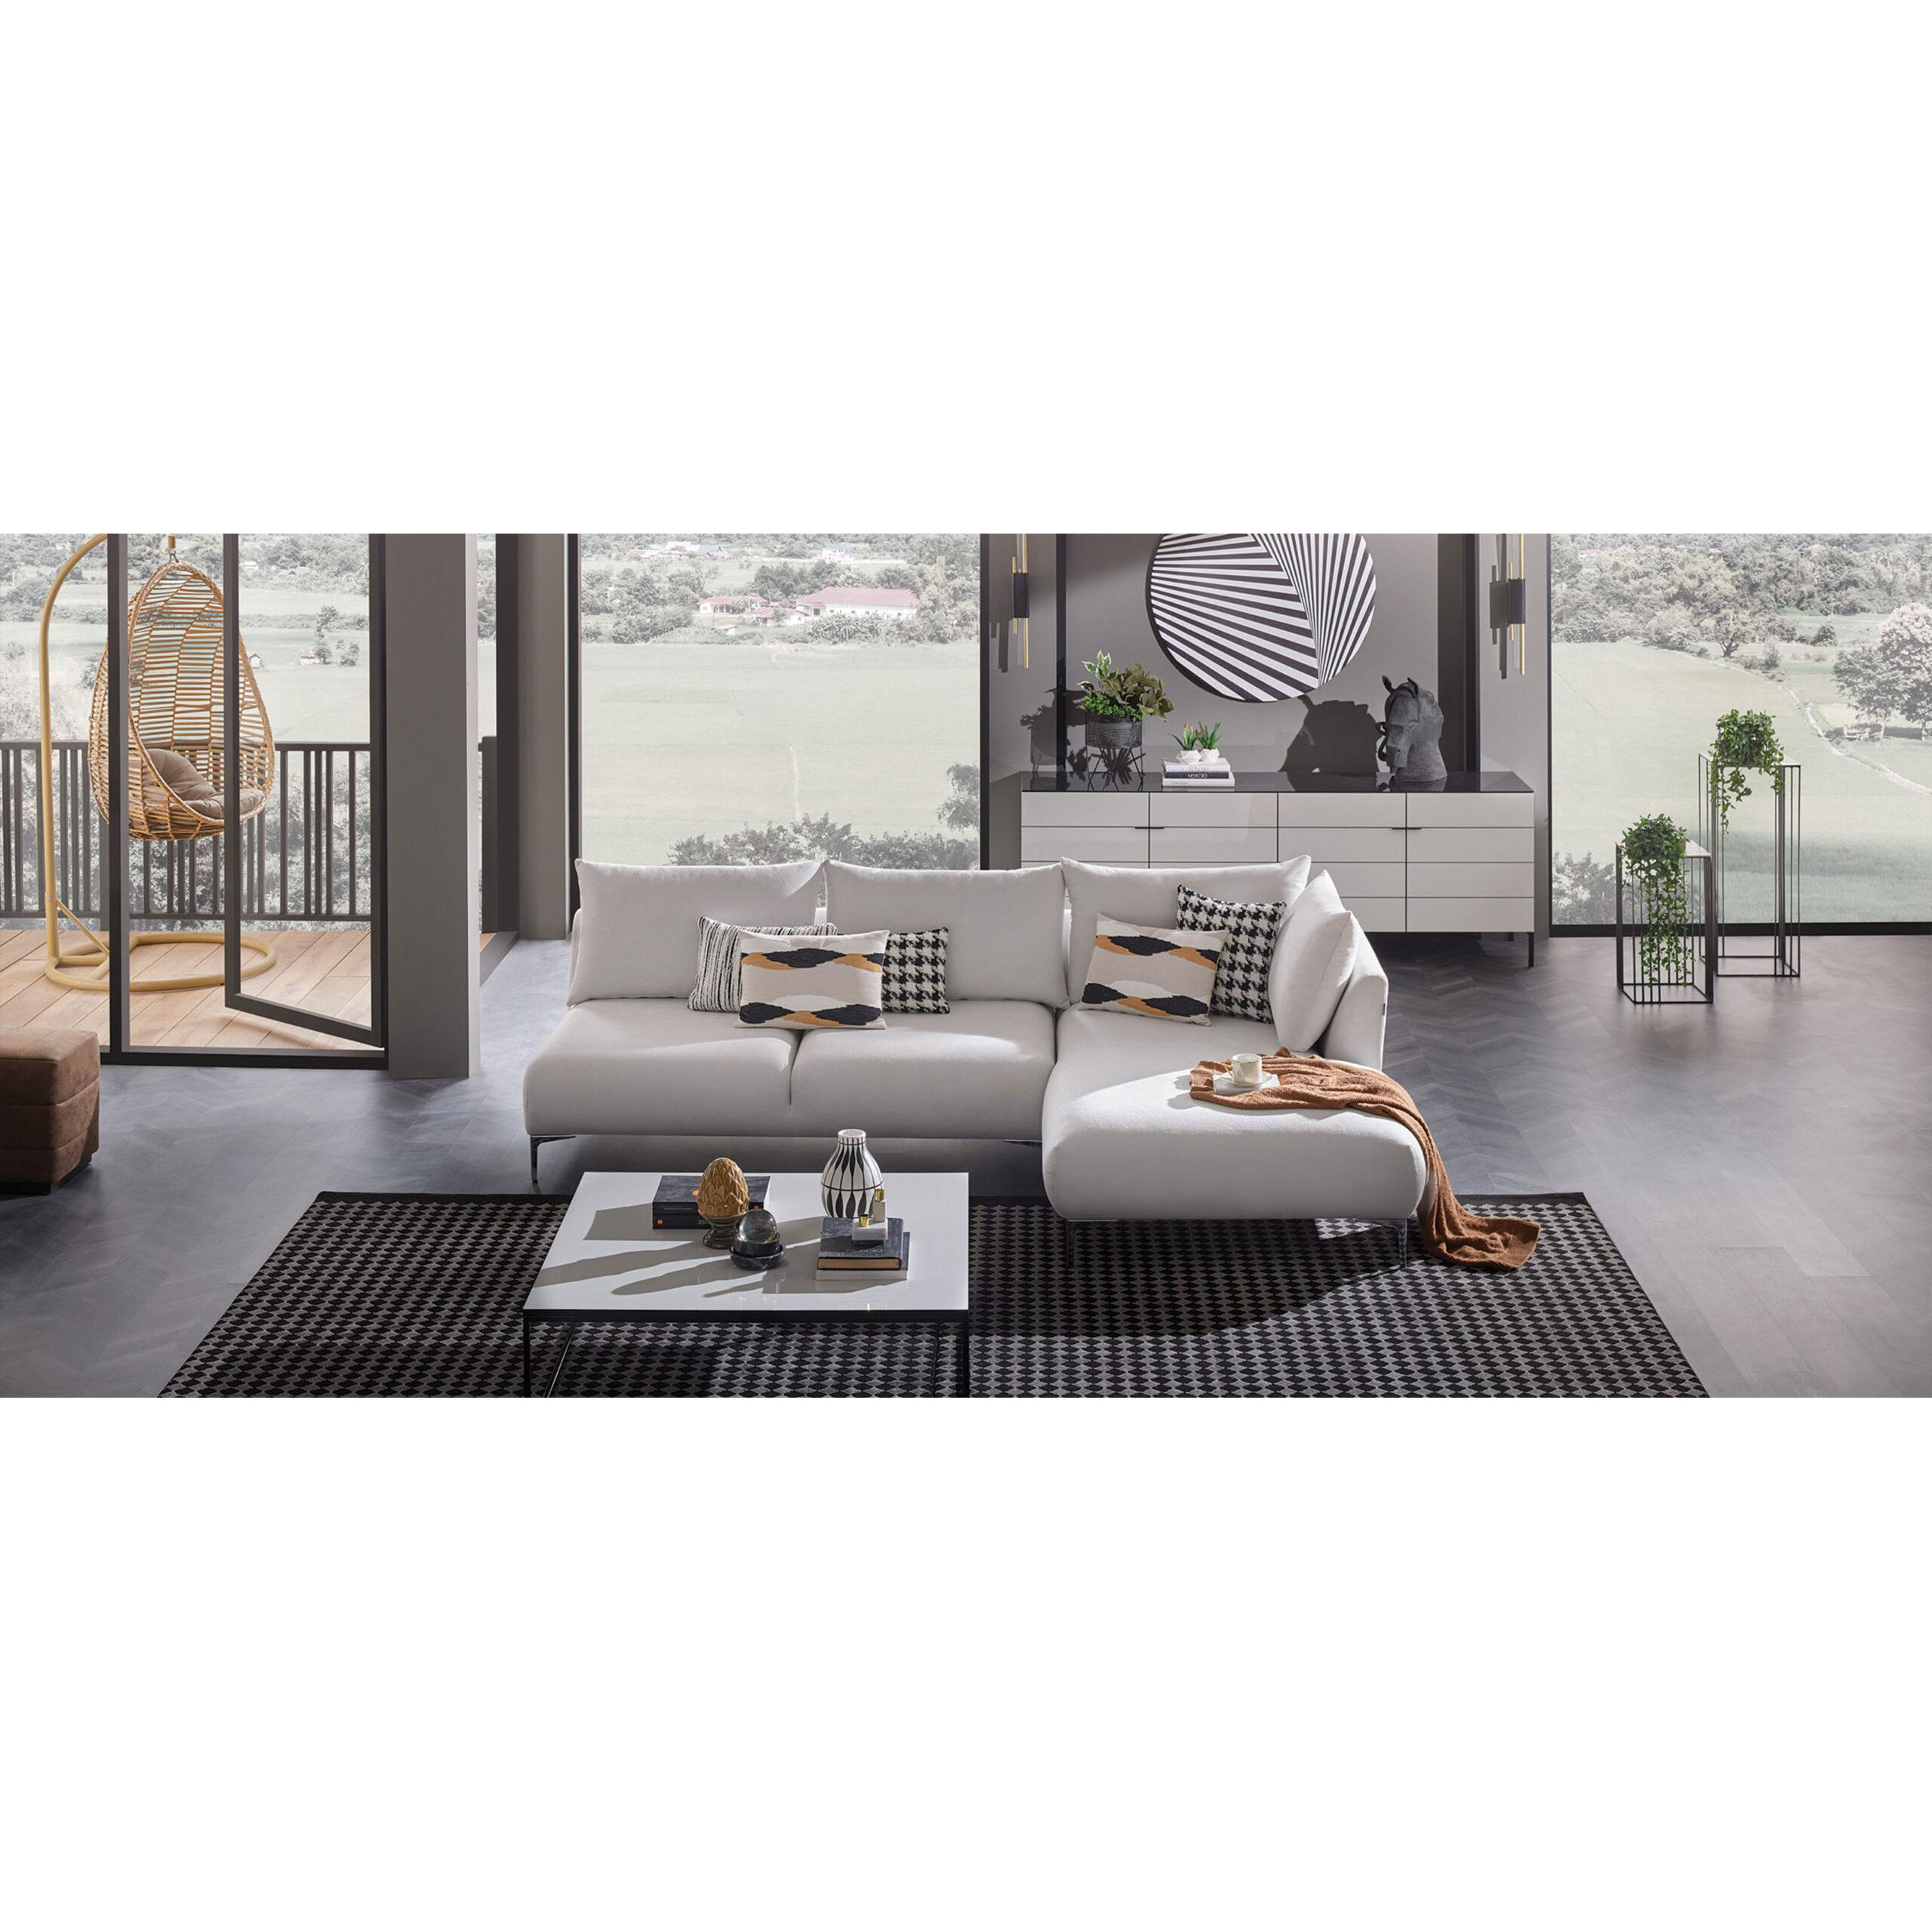 Модуль дивана Enza Home Mayfair, двухместный, размер 173x98x80 см